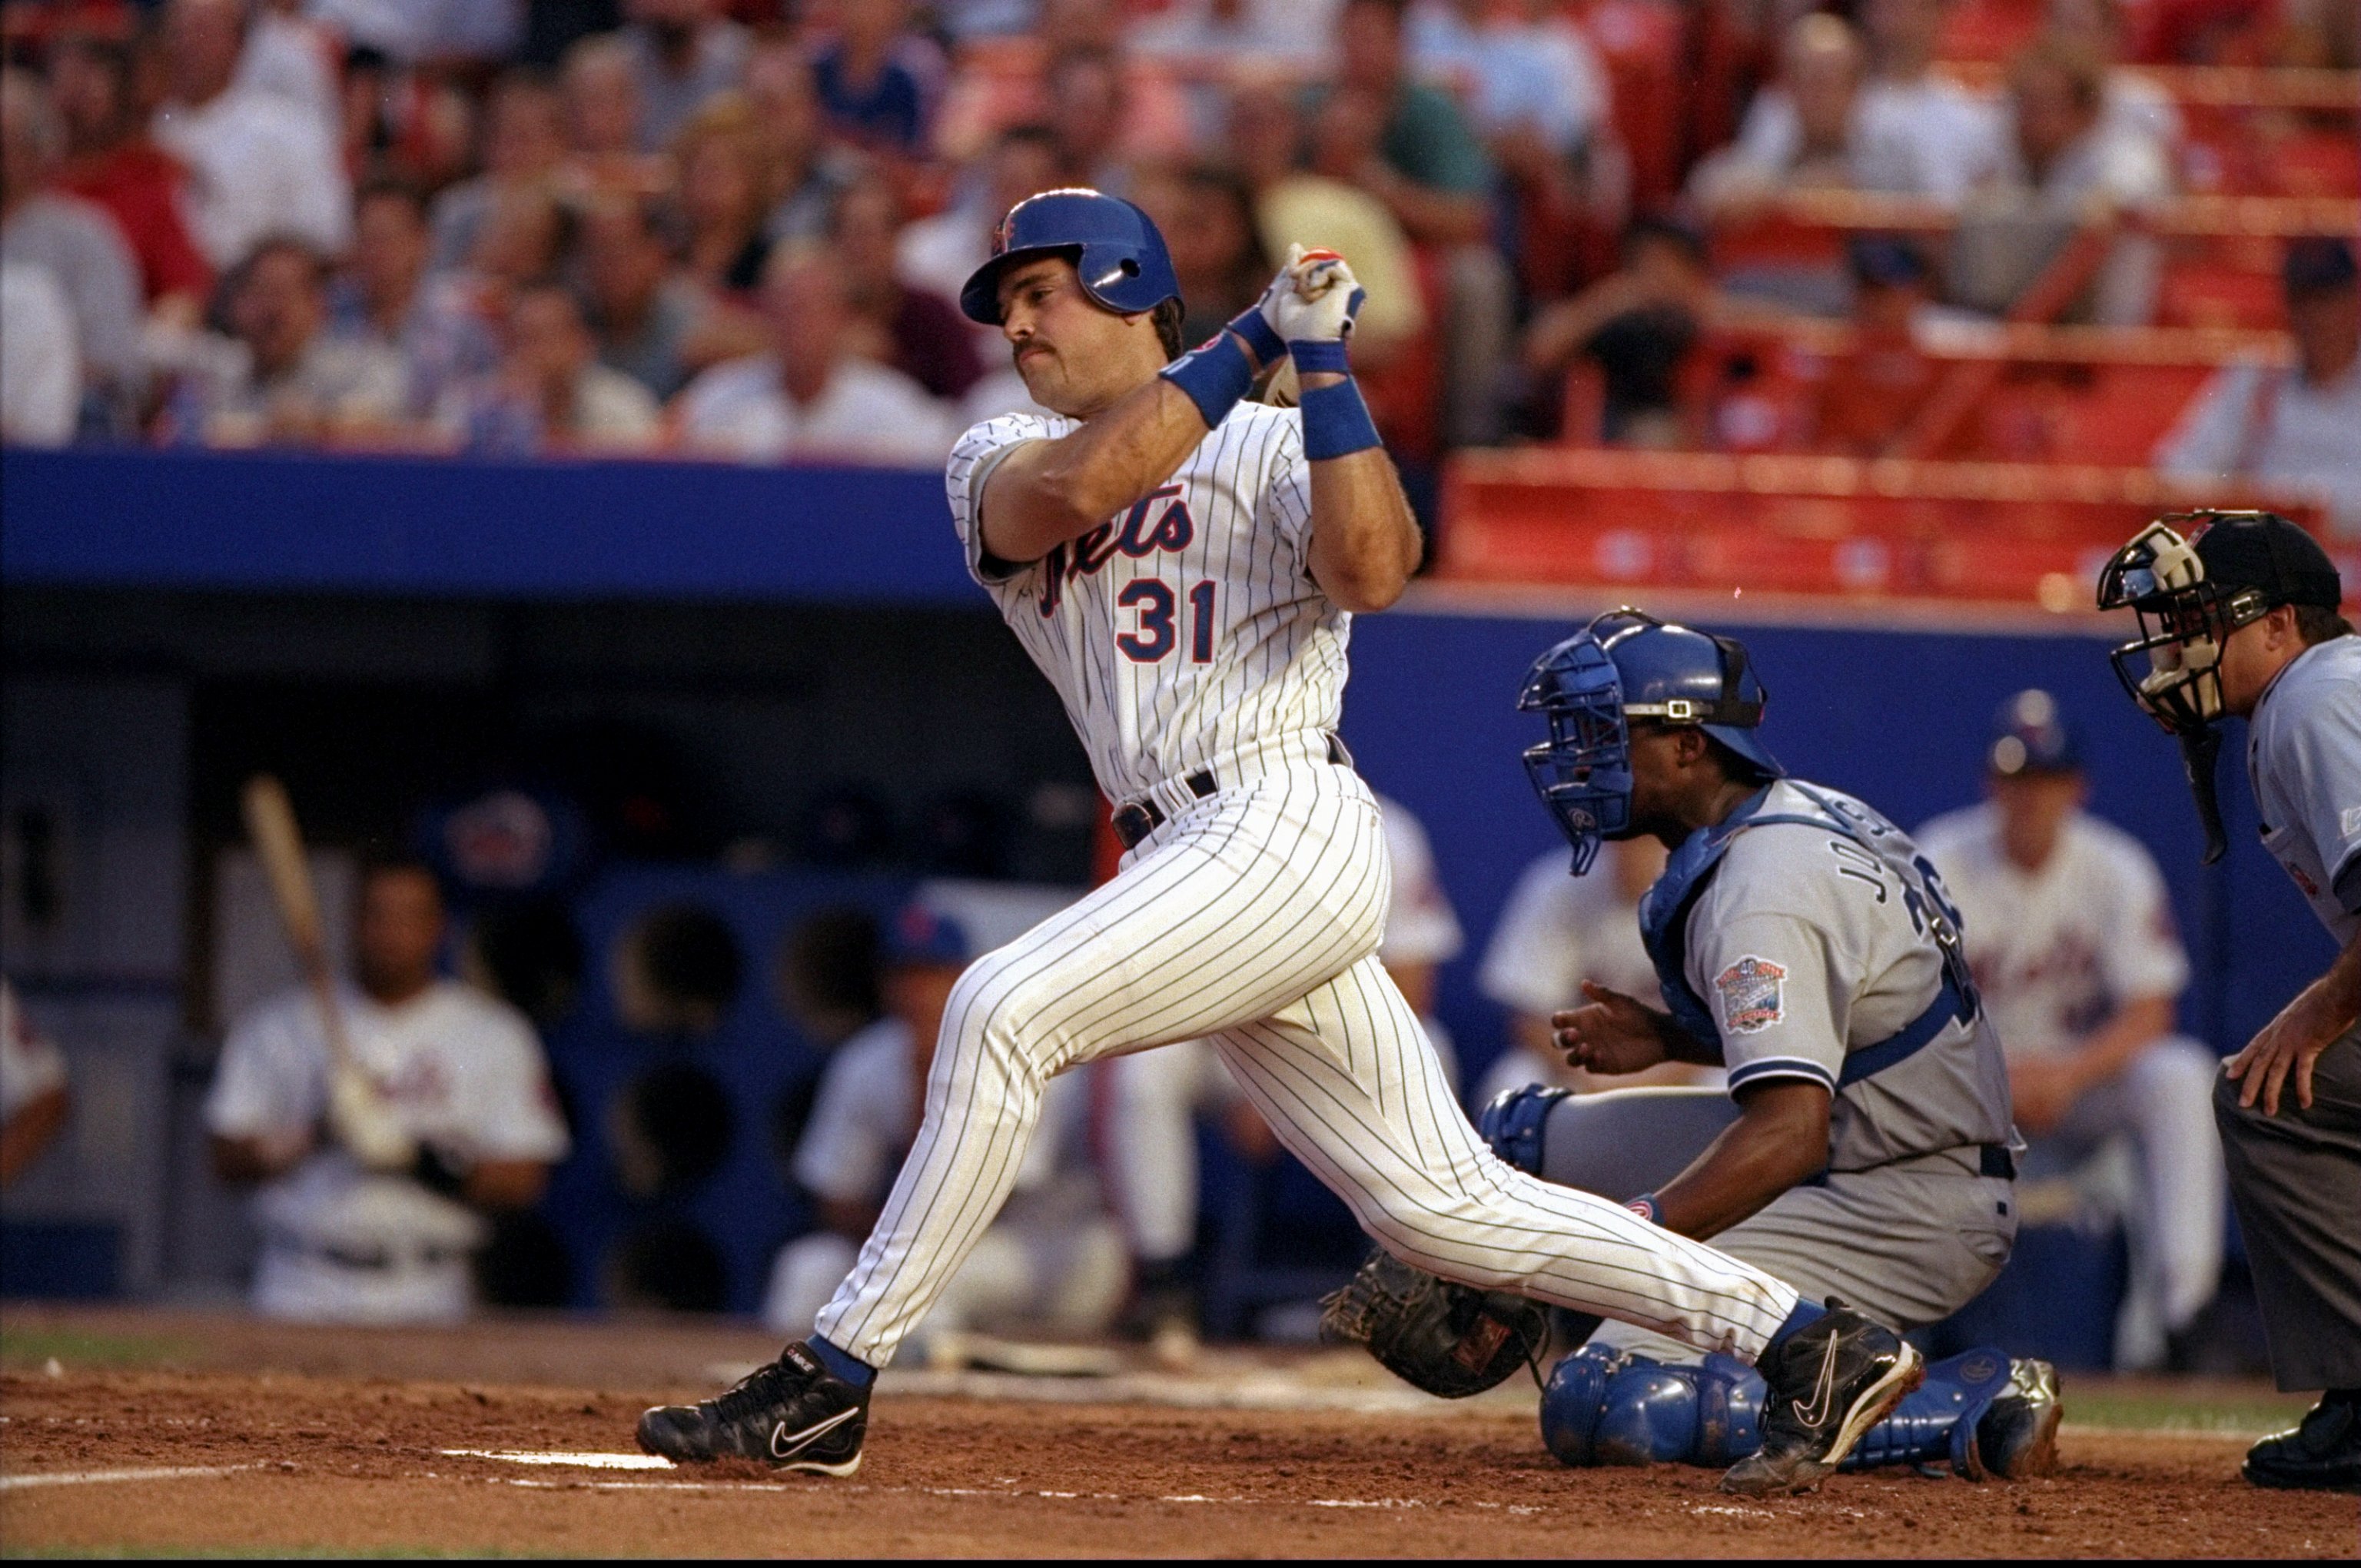 NY Mets All-Time Top 10 Home Run Leaders - Mets Hot Corner